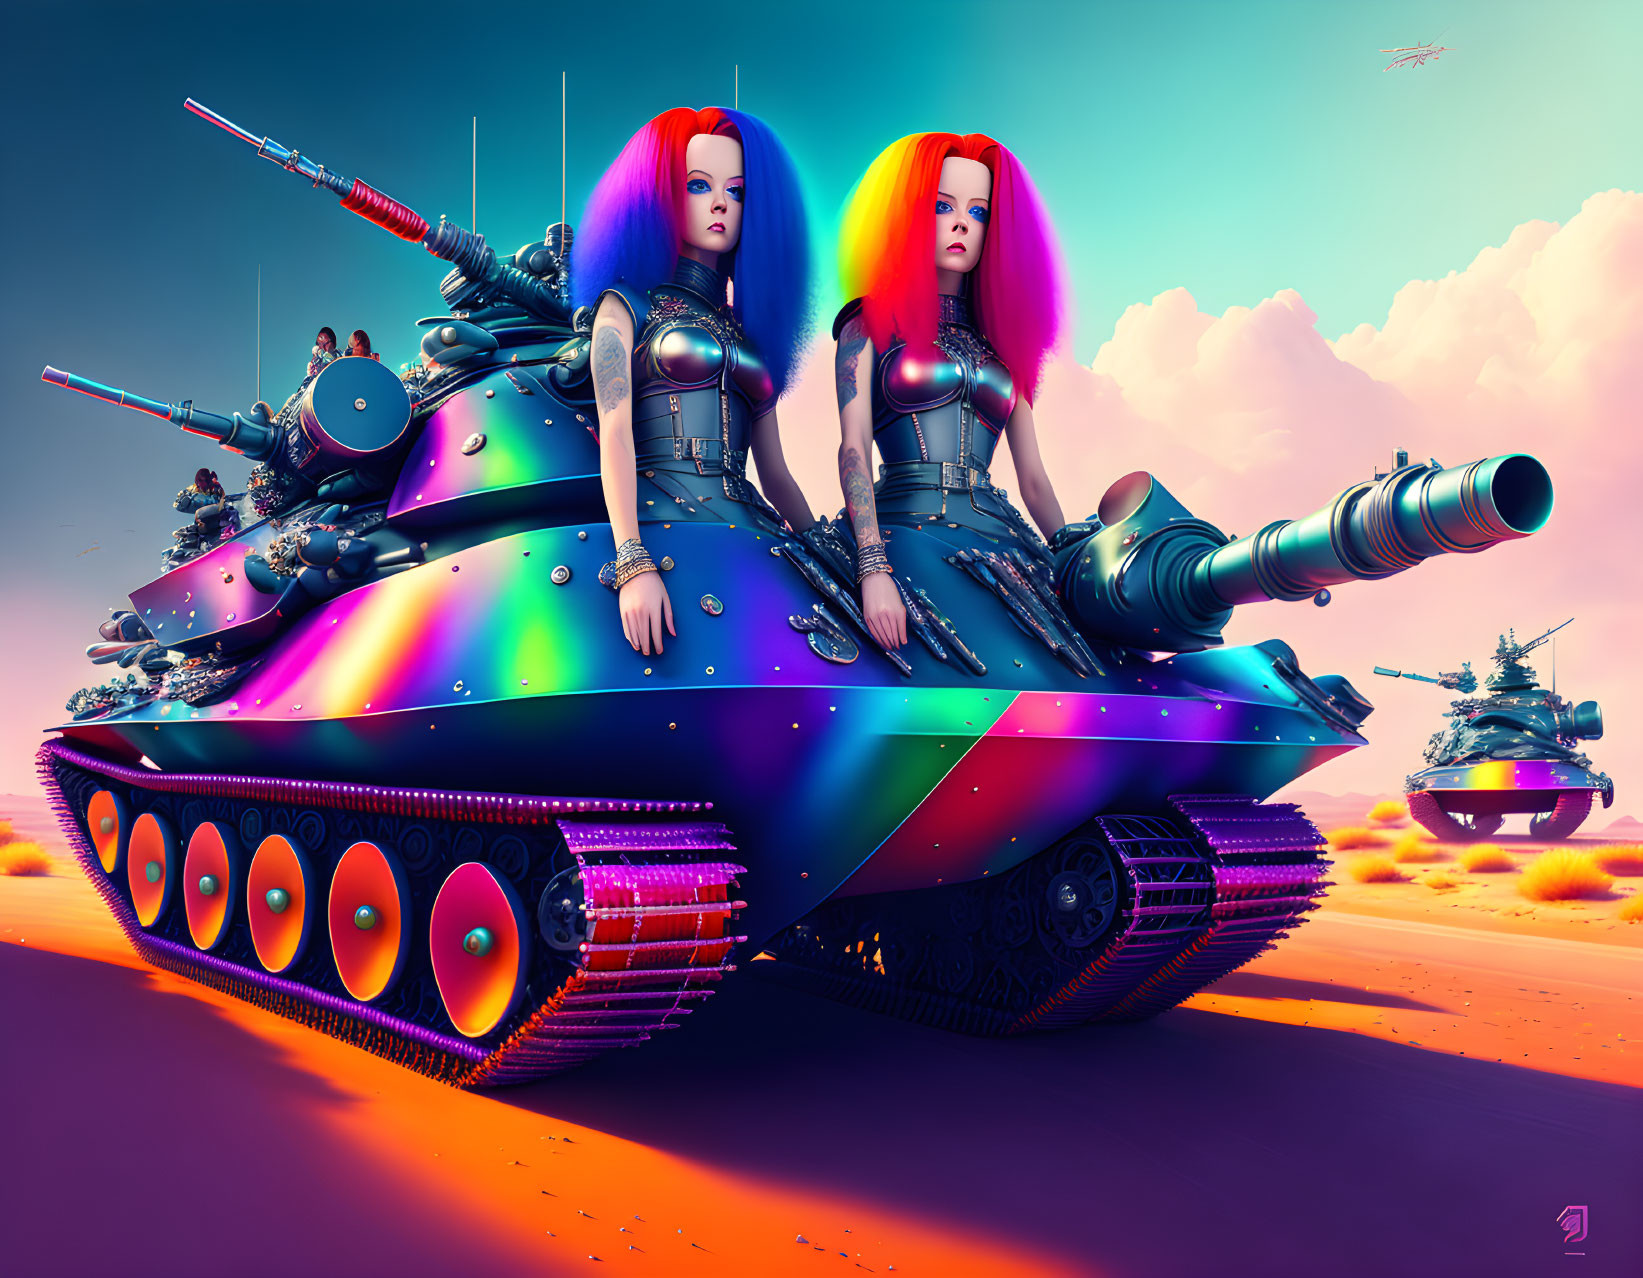 Colorful futuristic female warriors on armed tank in desert scene